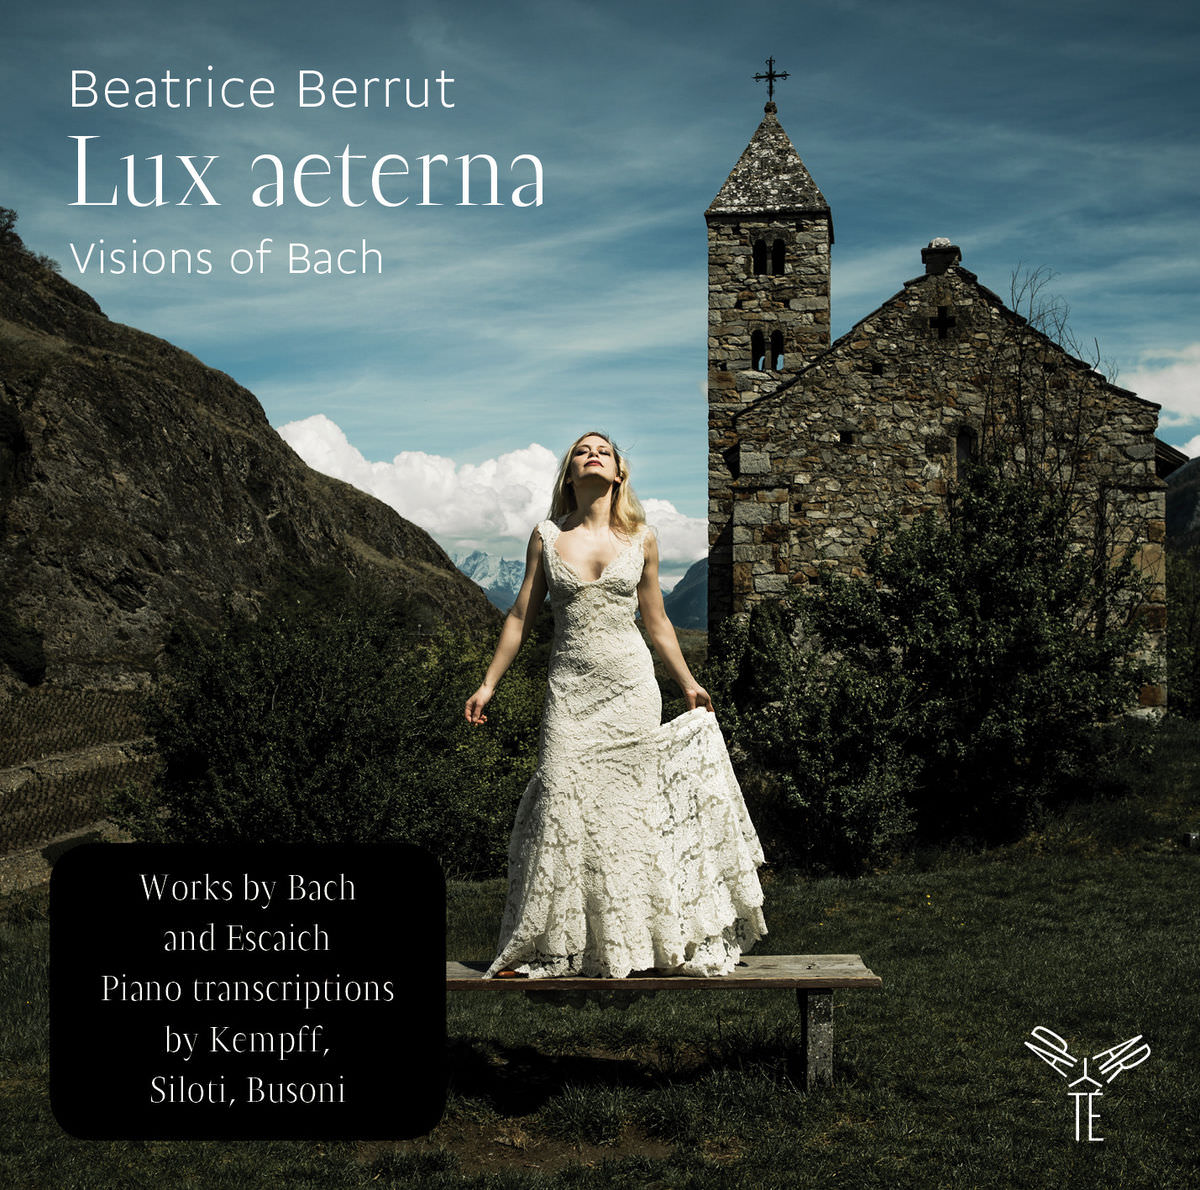 Beatrice Berrut - Lux aeterna: Visions of Bach (2015) [Qobuz FLAC 24bit/96kHz]